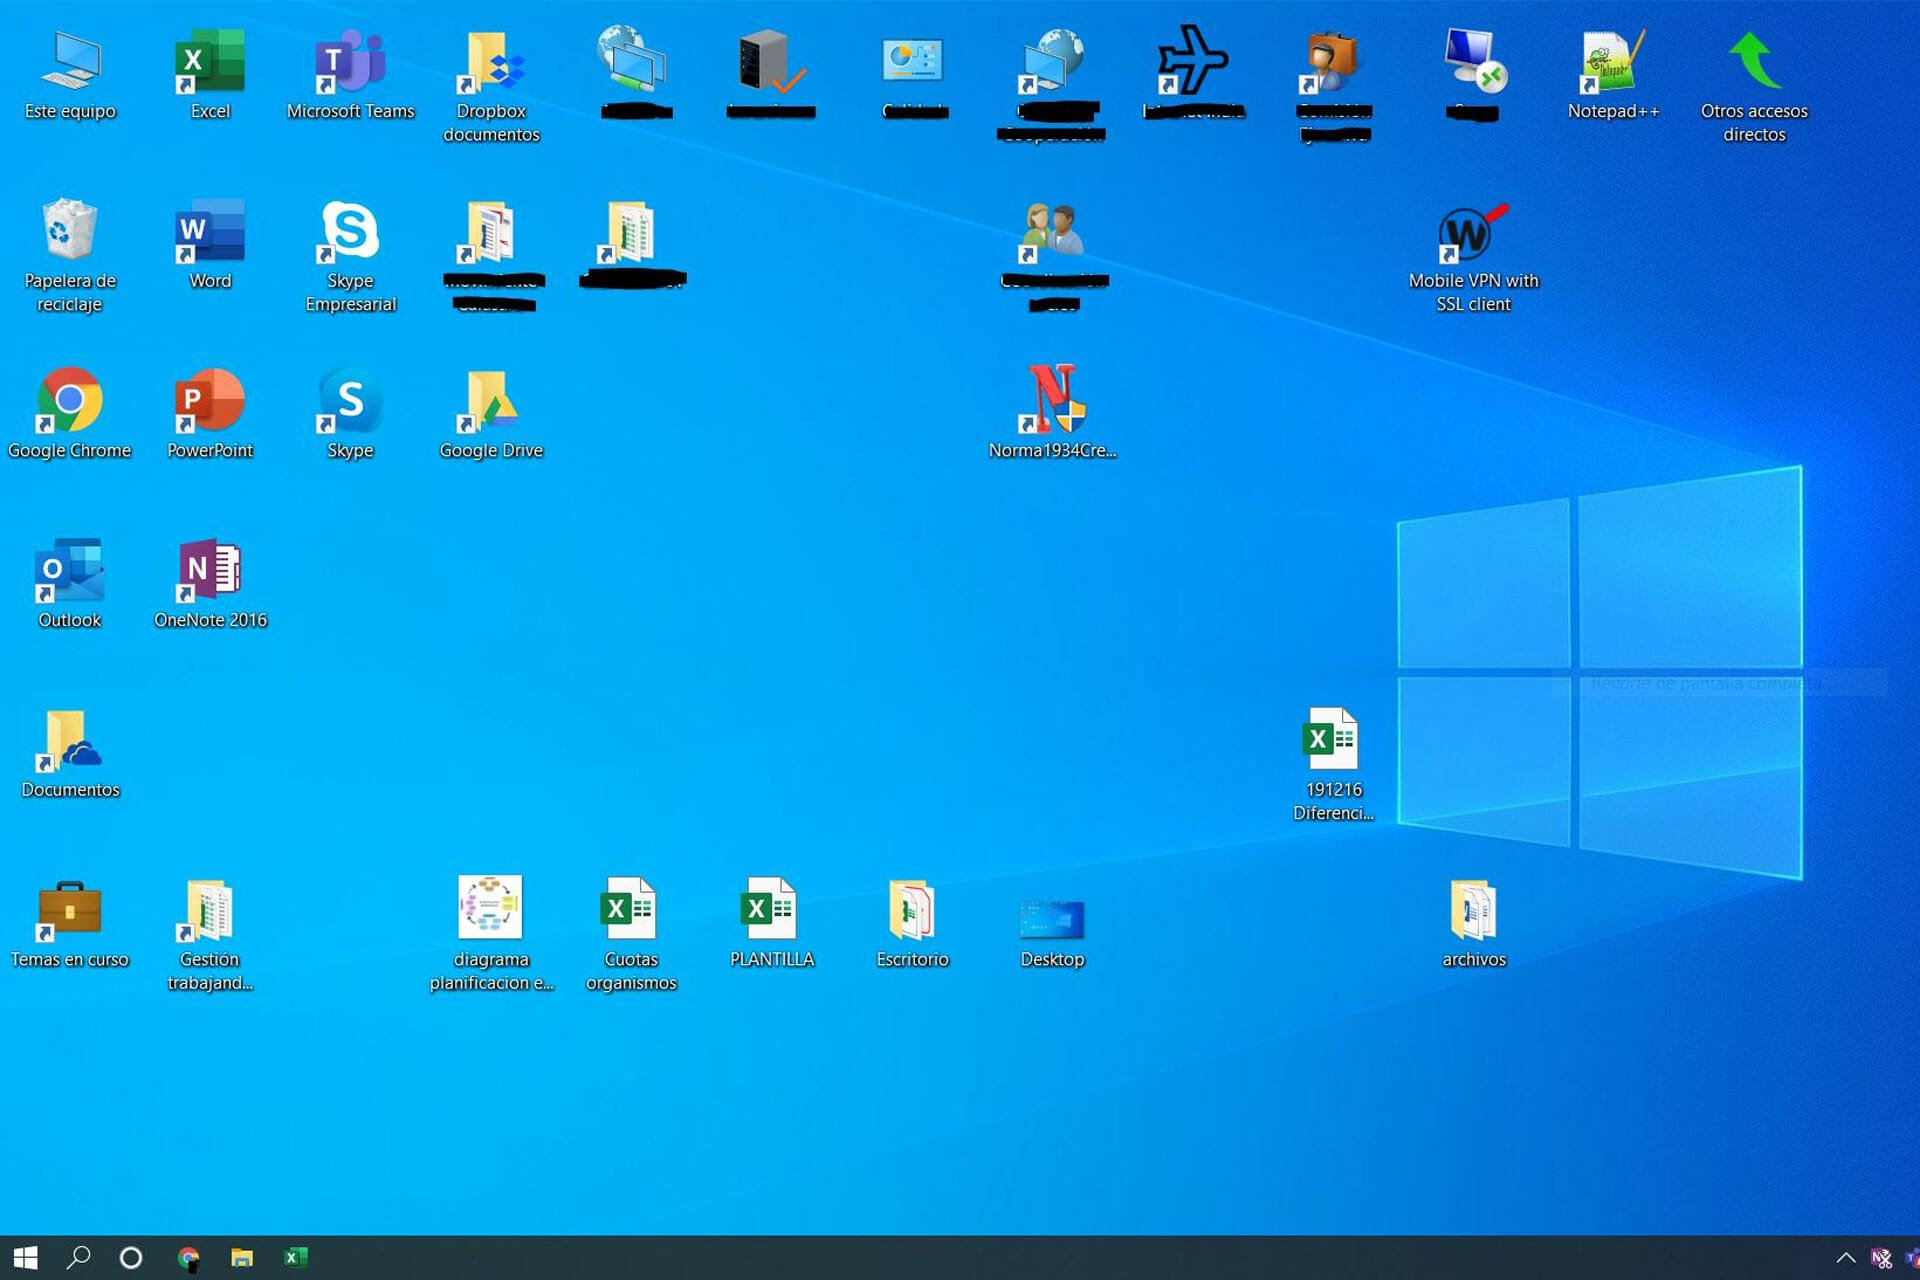 Windows 10 11 keeps refreshing